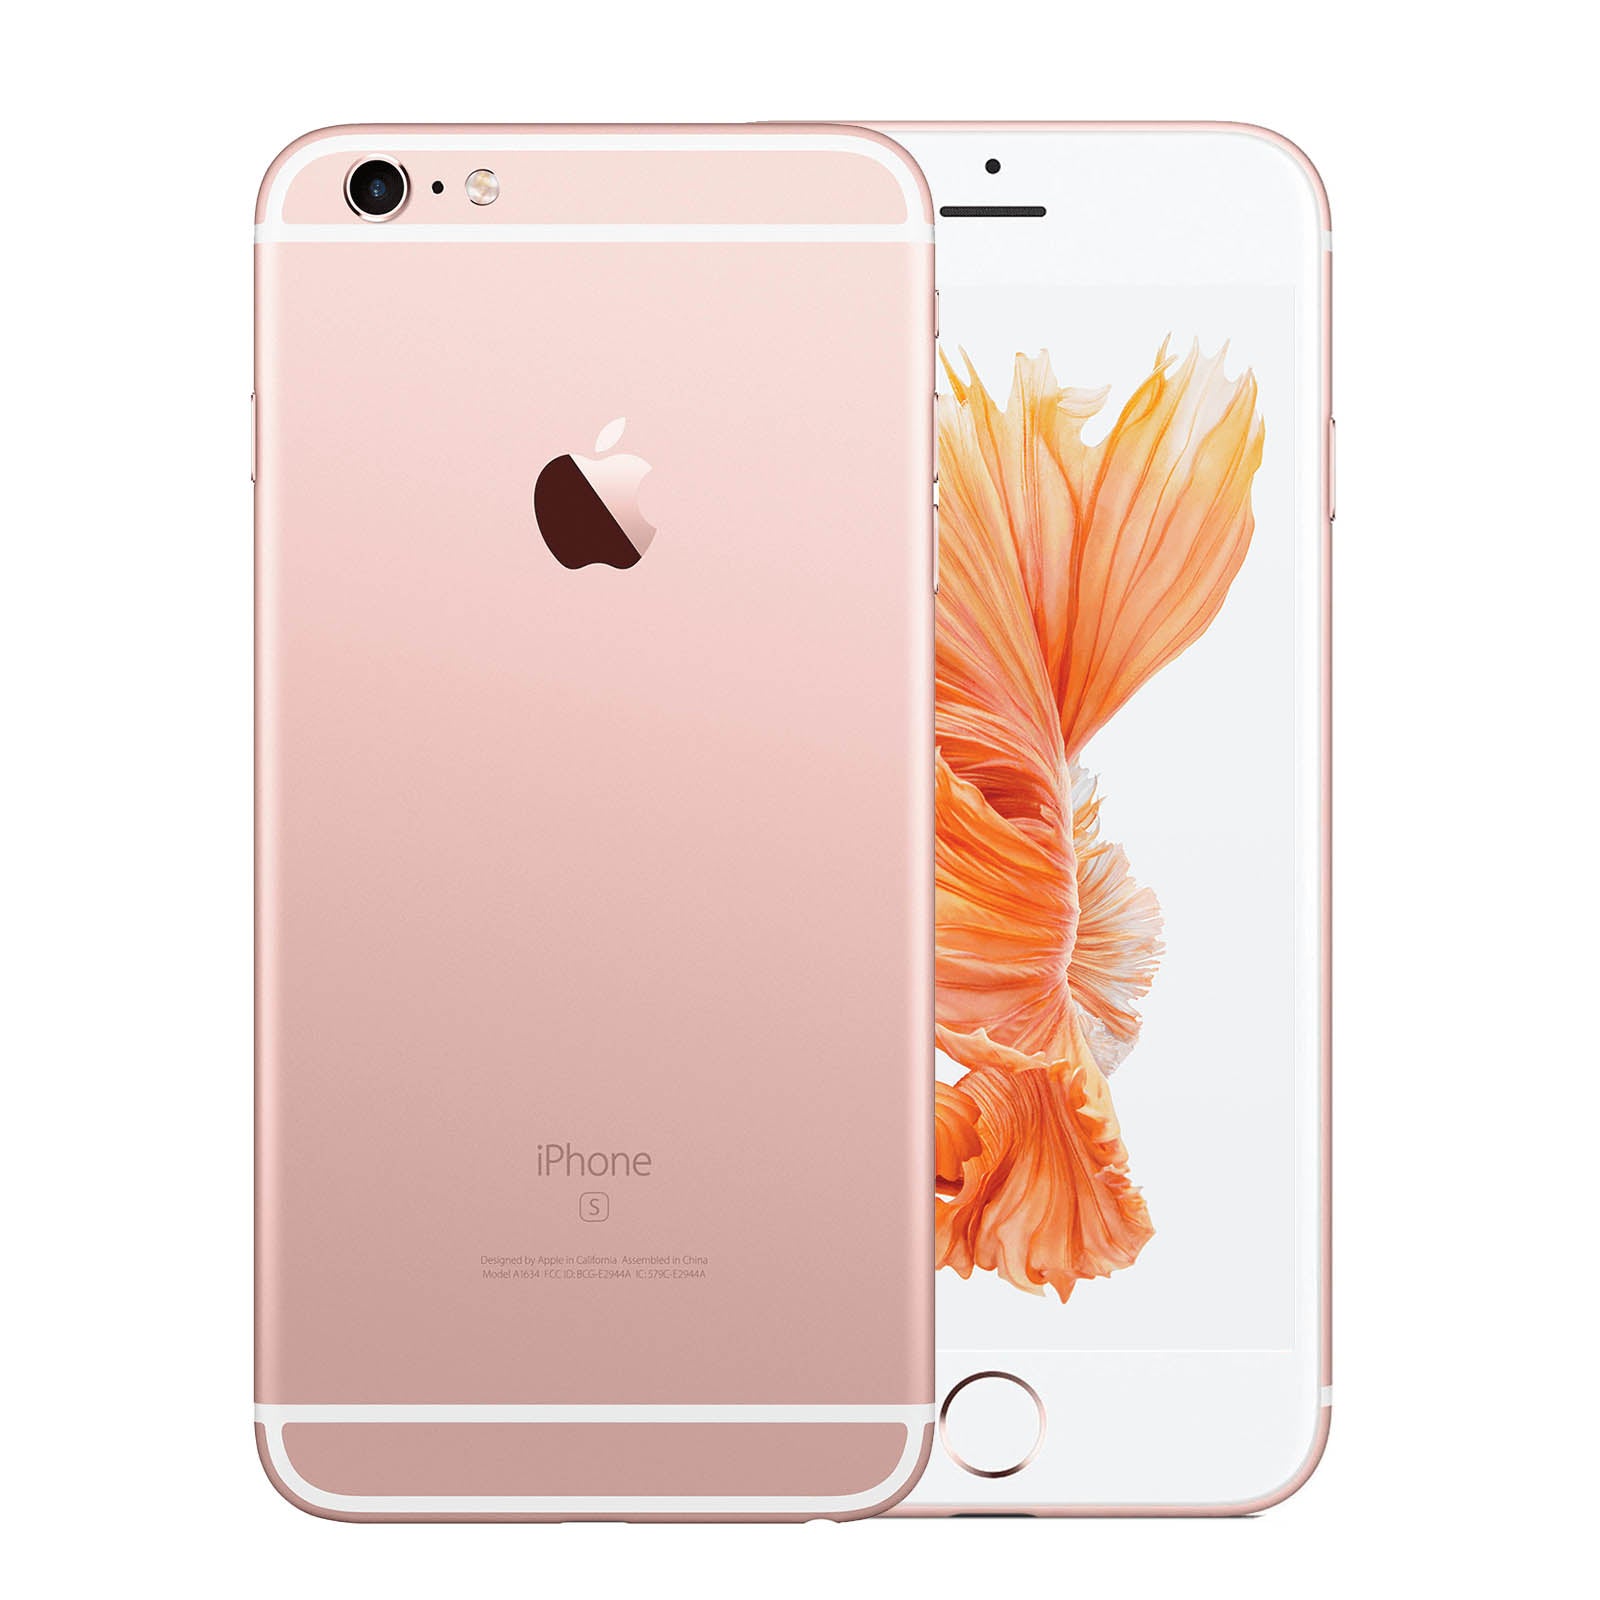 Apple iPhone 6S Plus 32GB Rose Gold Very Good - Unlocked